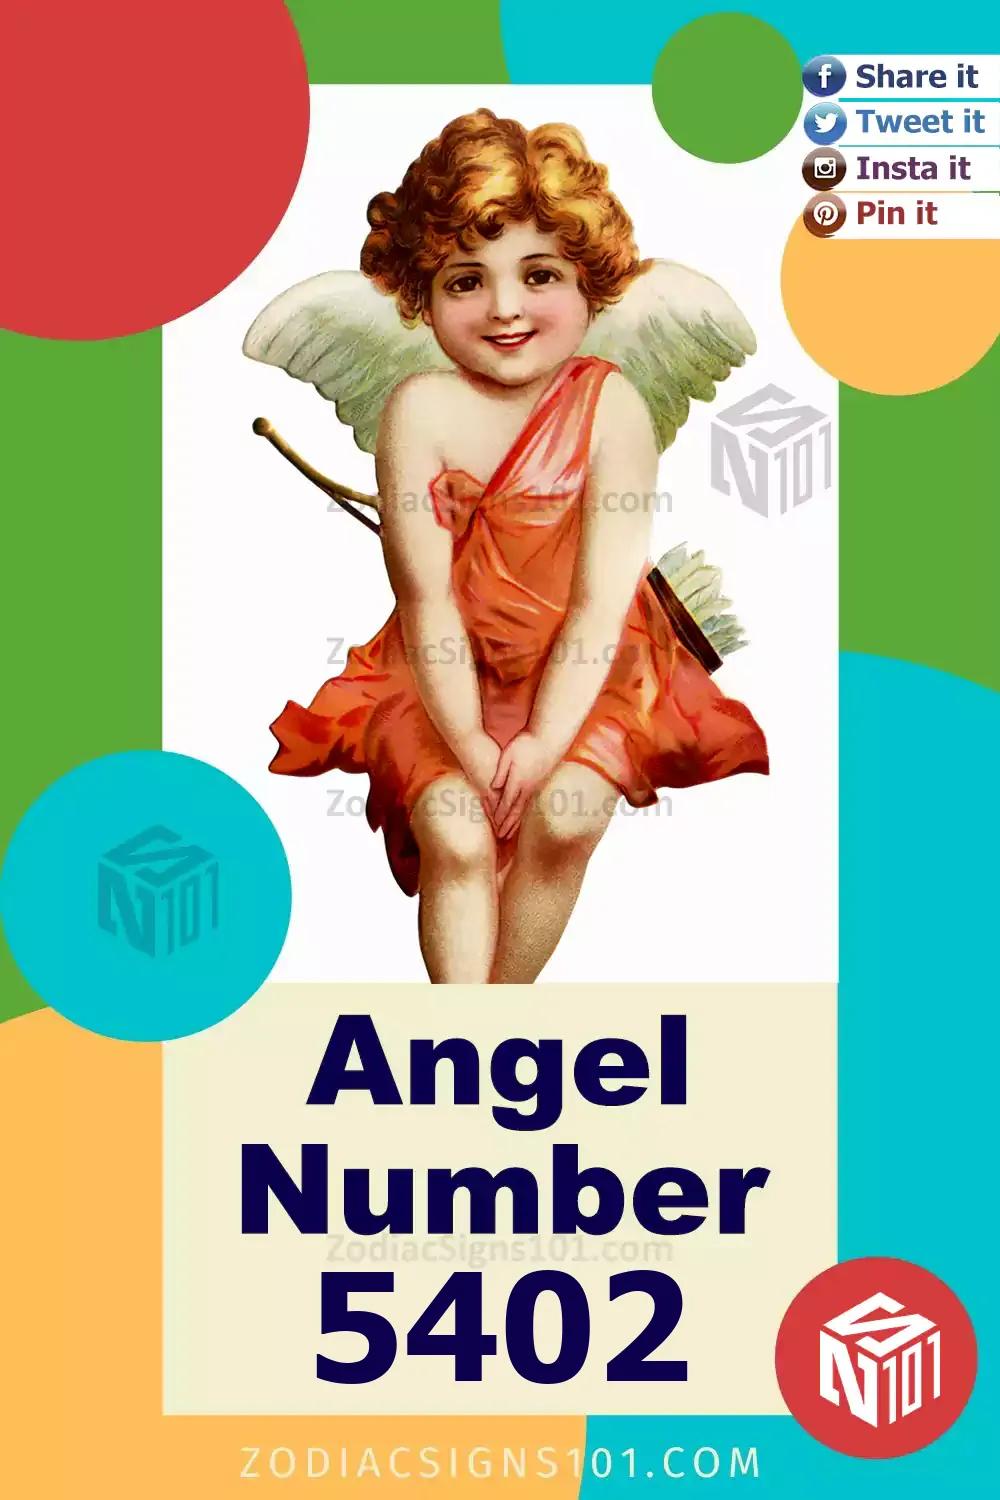 5402-Angel-Number-Meaning.jpg